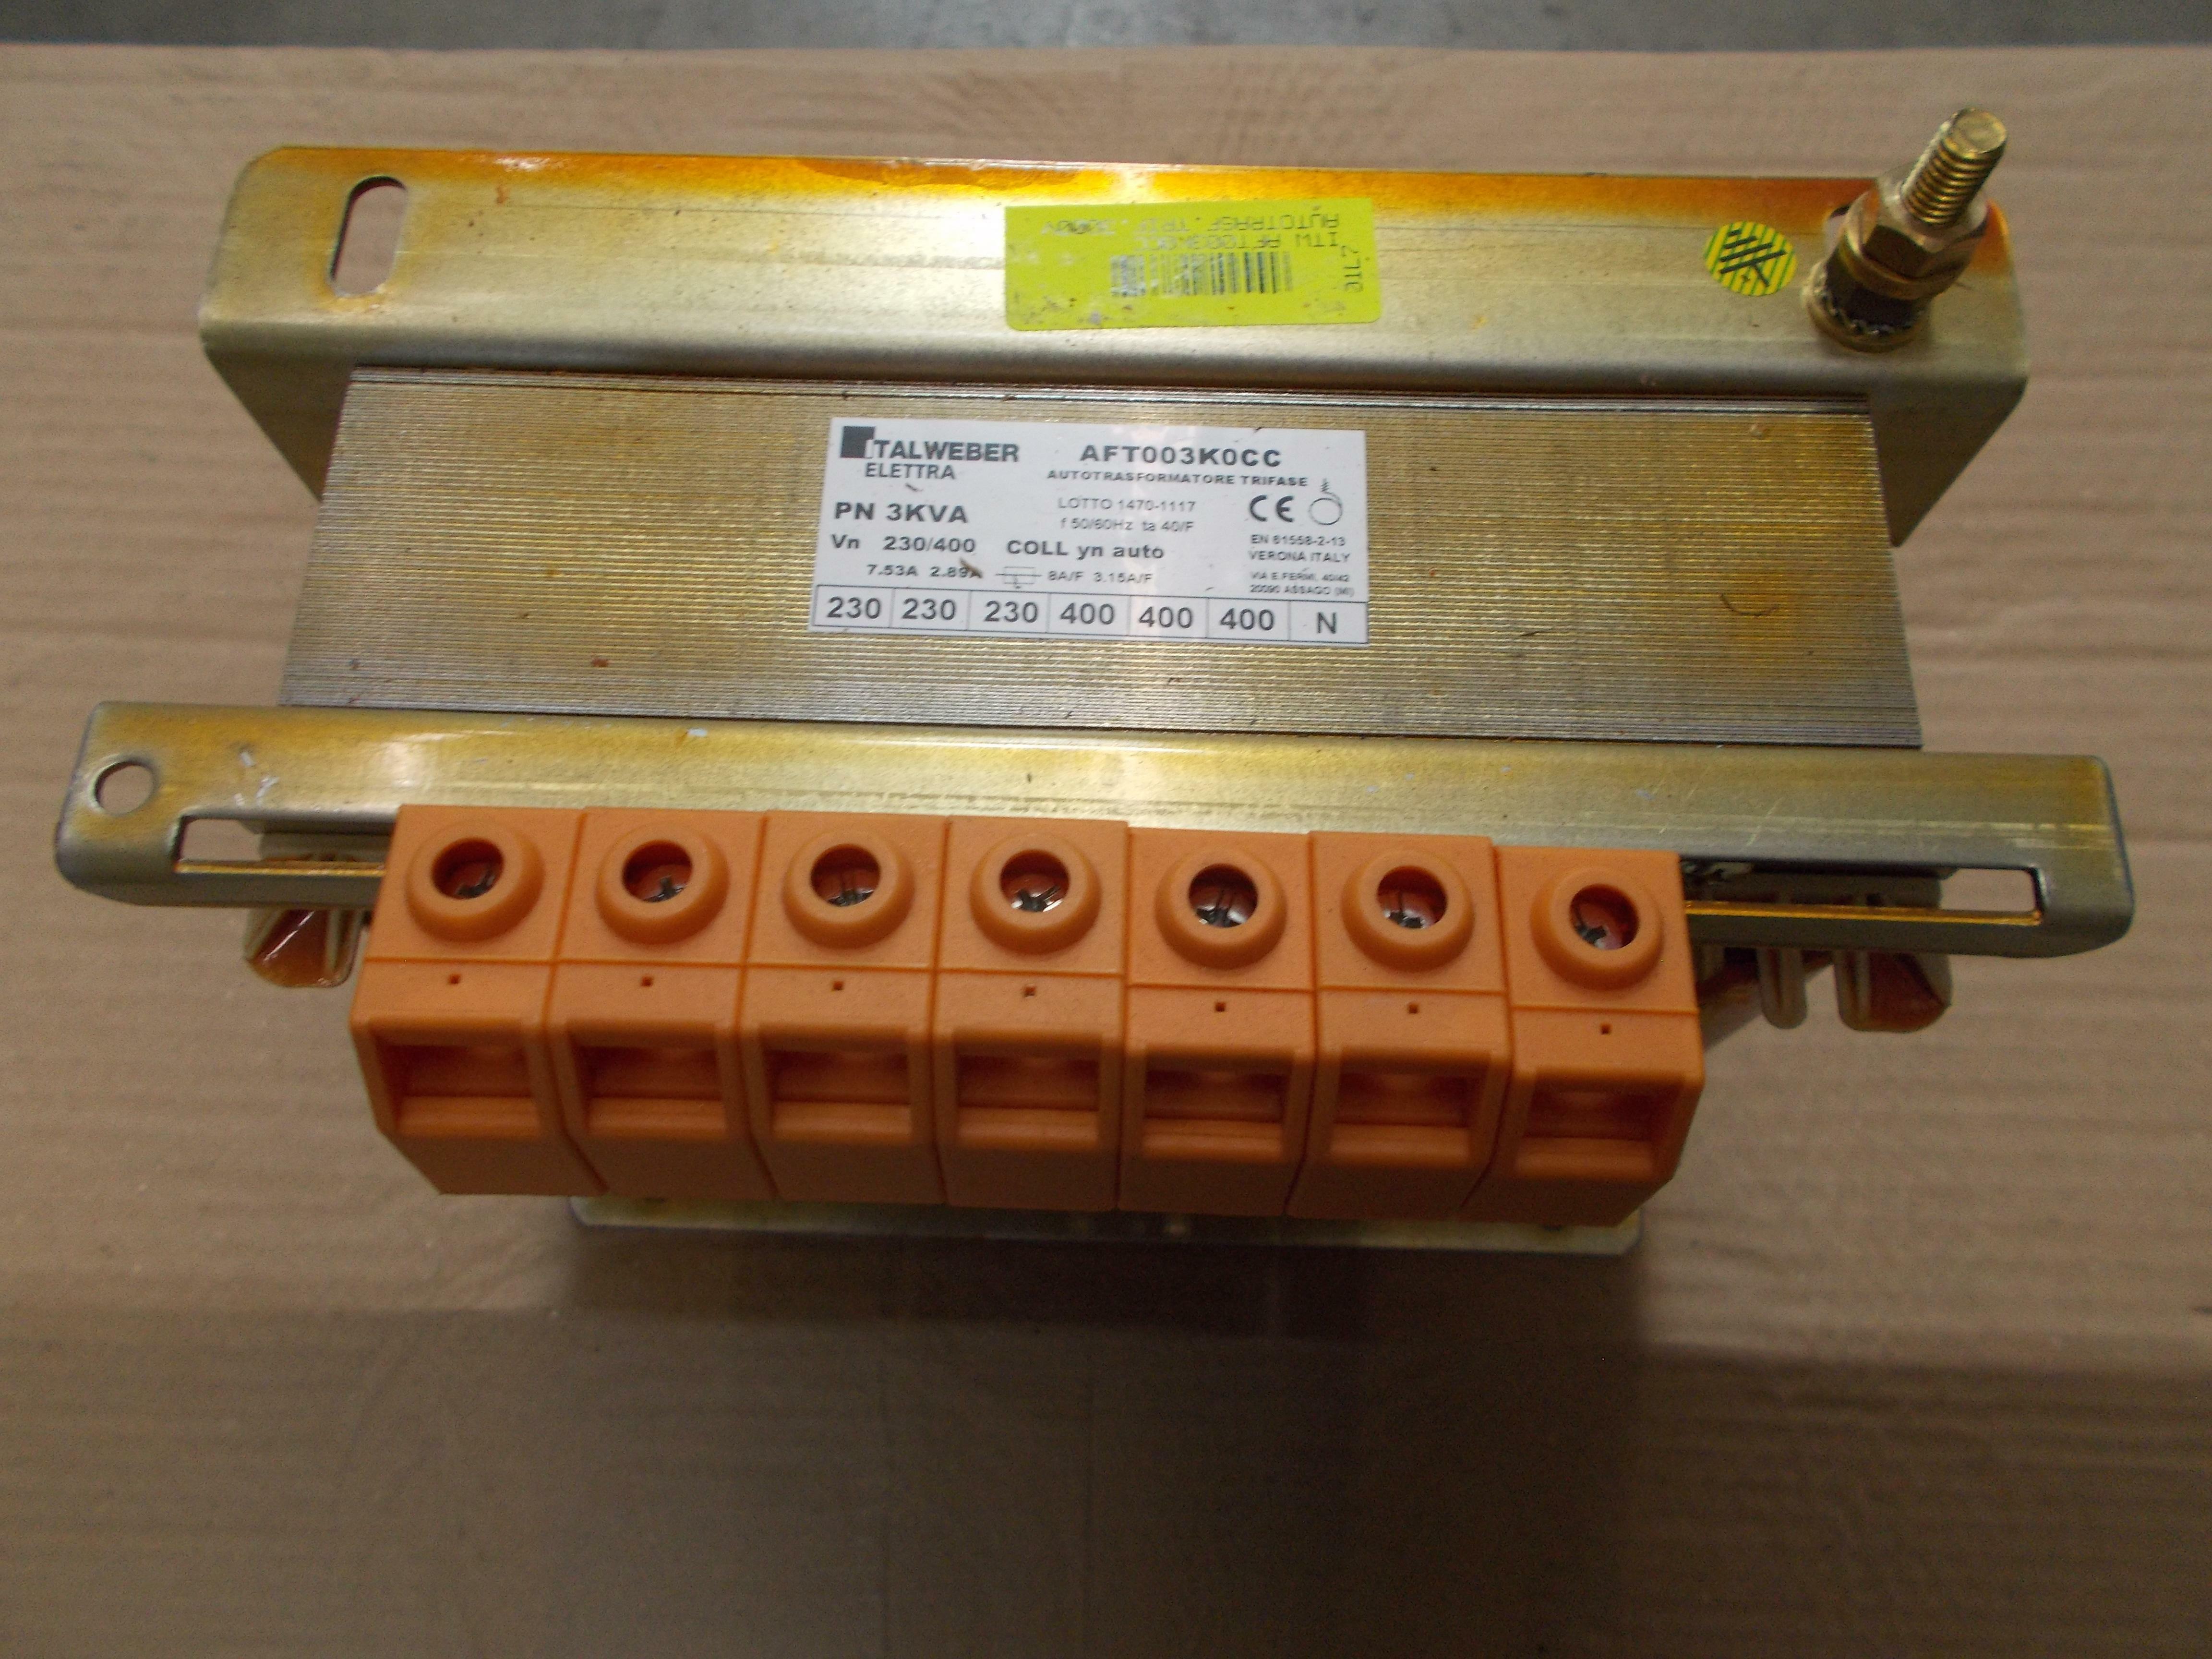 italweber italweber autotrasformatore trifase 3 kva 230-400 v aft003k0cc